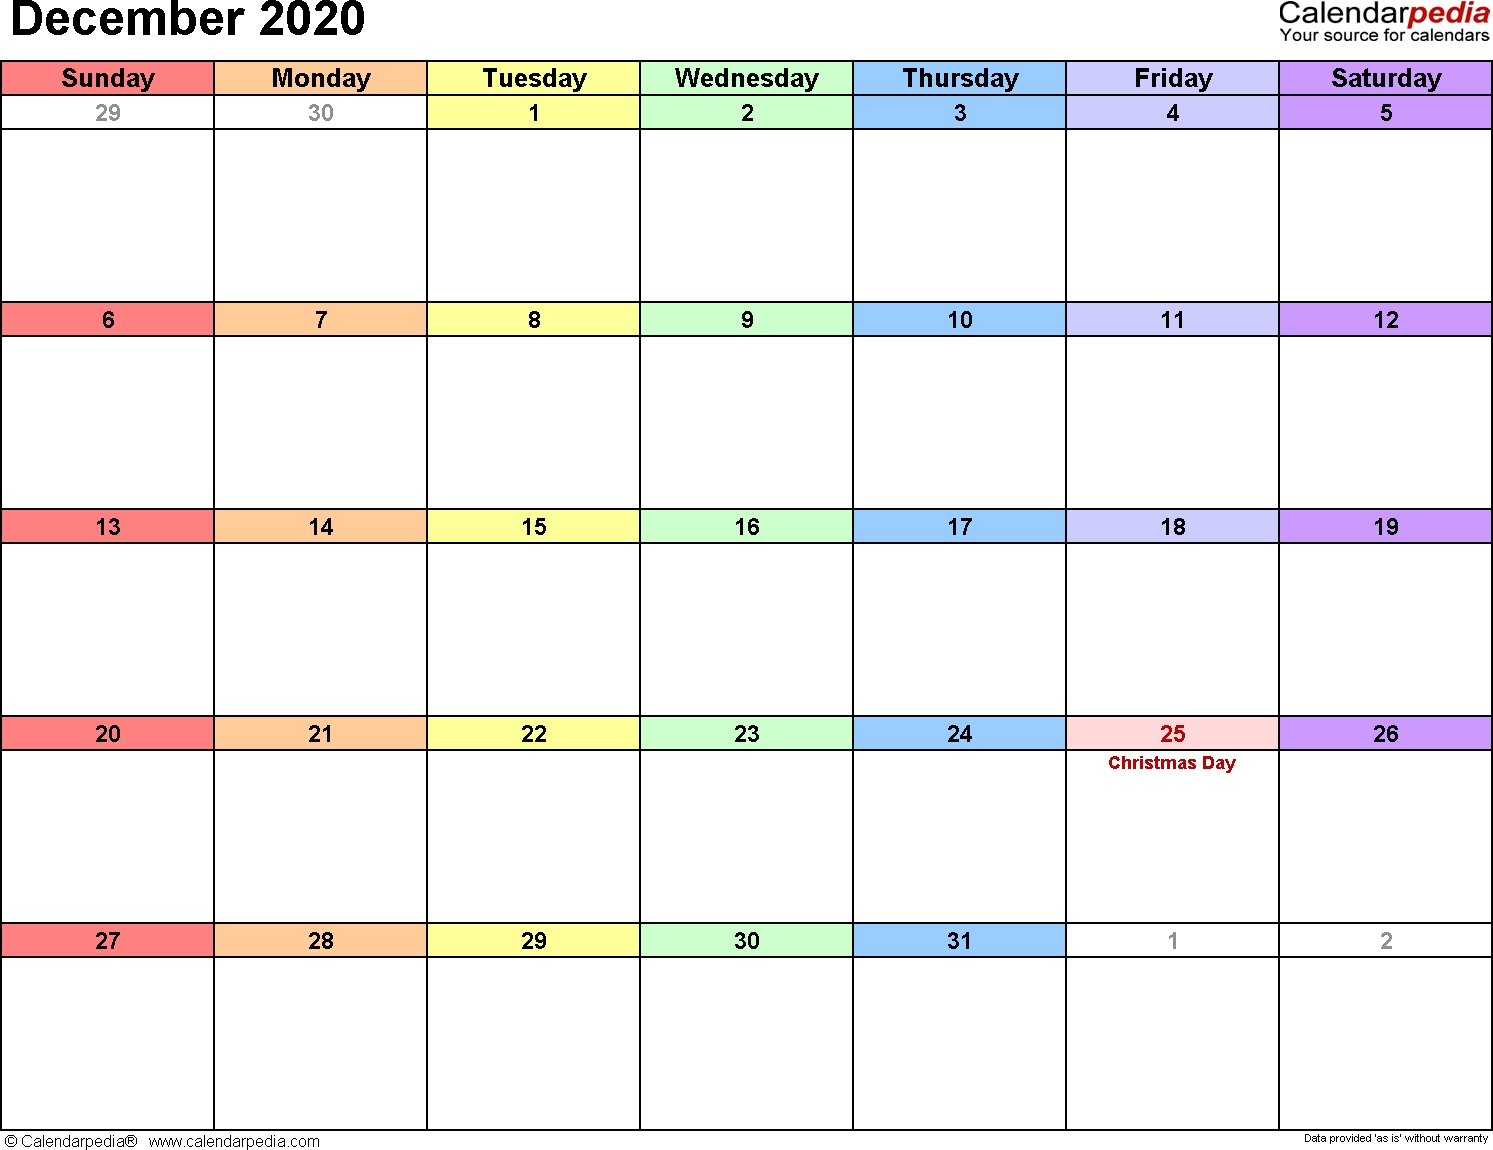 December 2020 Calendars For Word, Excel &amp; Pdf 2020 Calendar For December